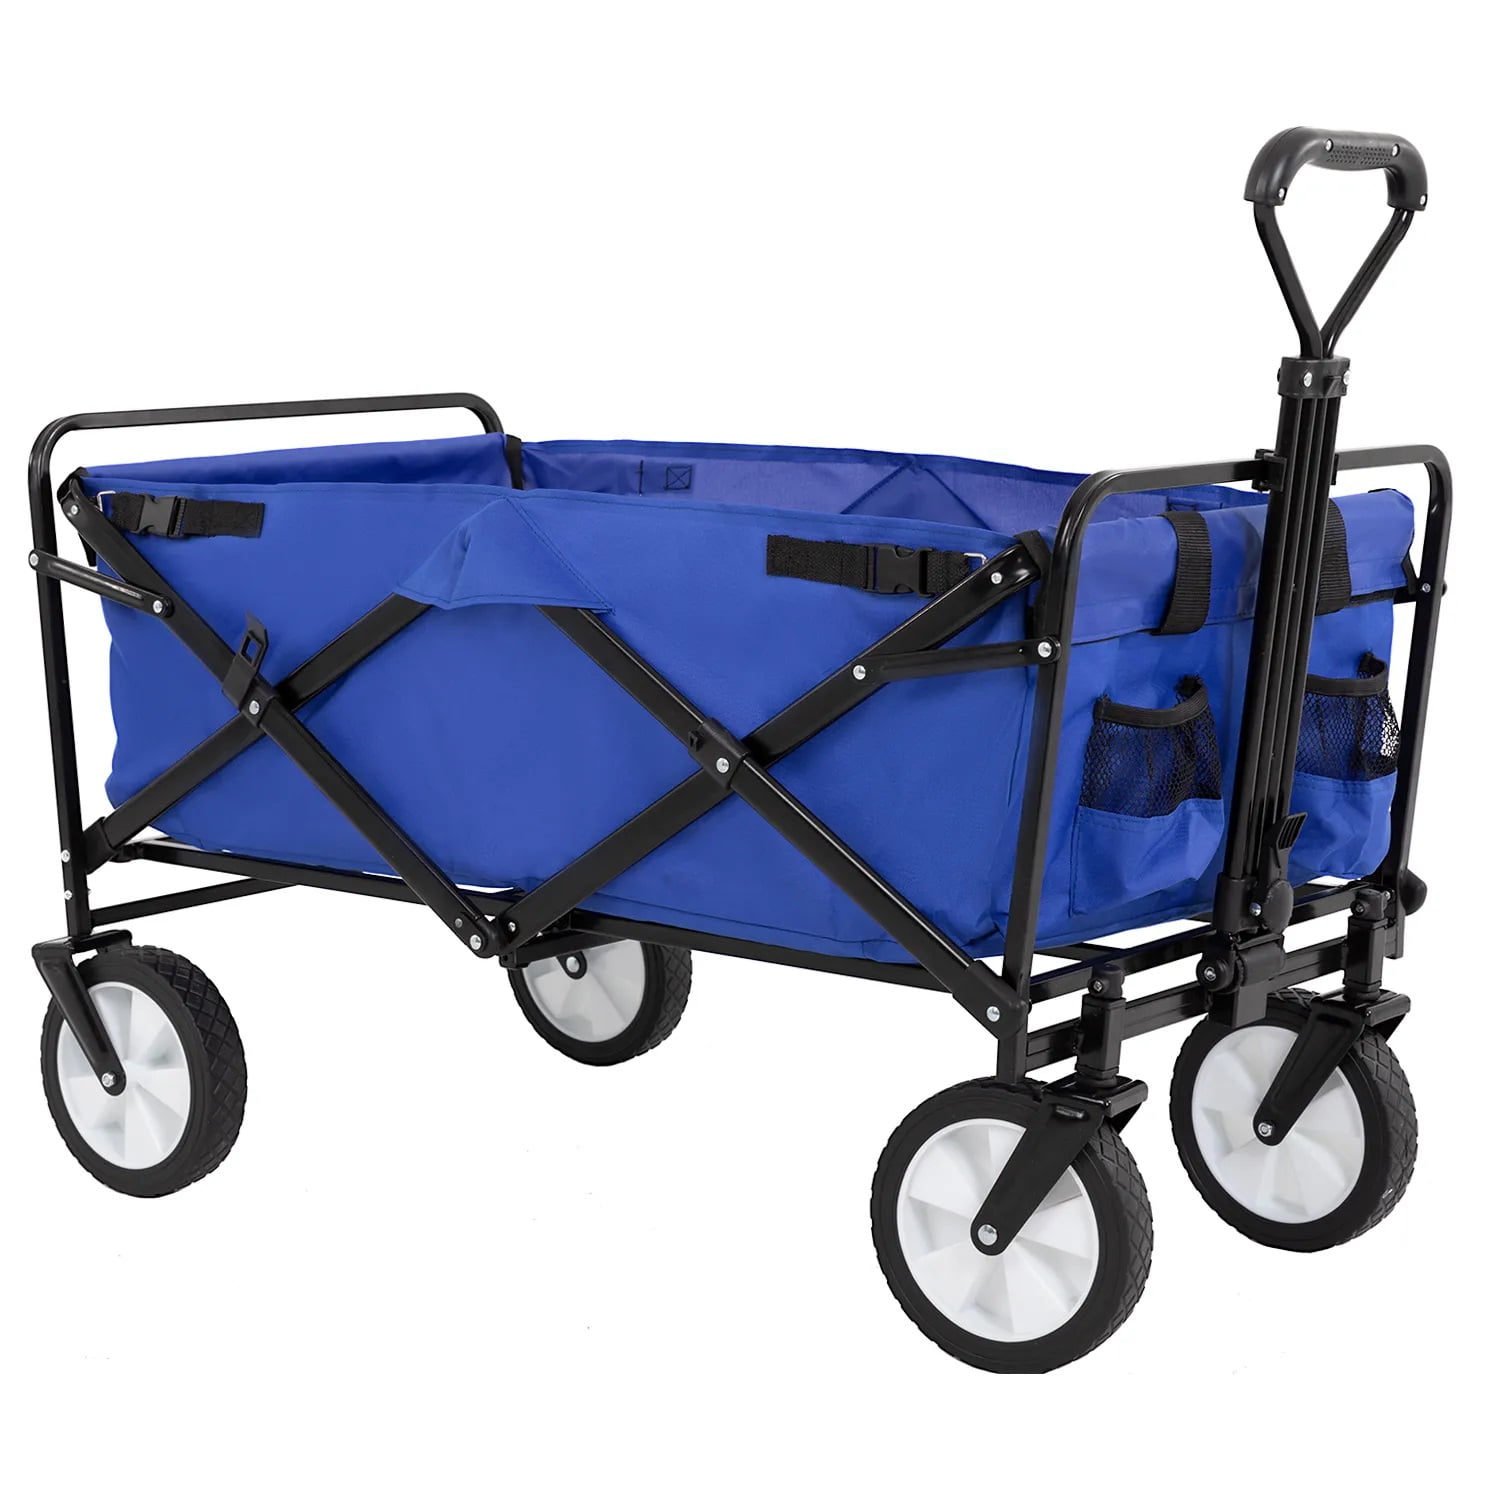 YRLLENSDAN Collapsible Folding Wagon, Garden Cart Folding Grocery Wagon ...